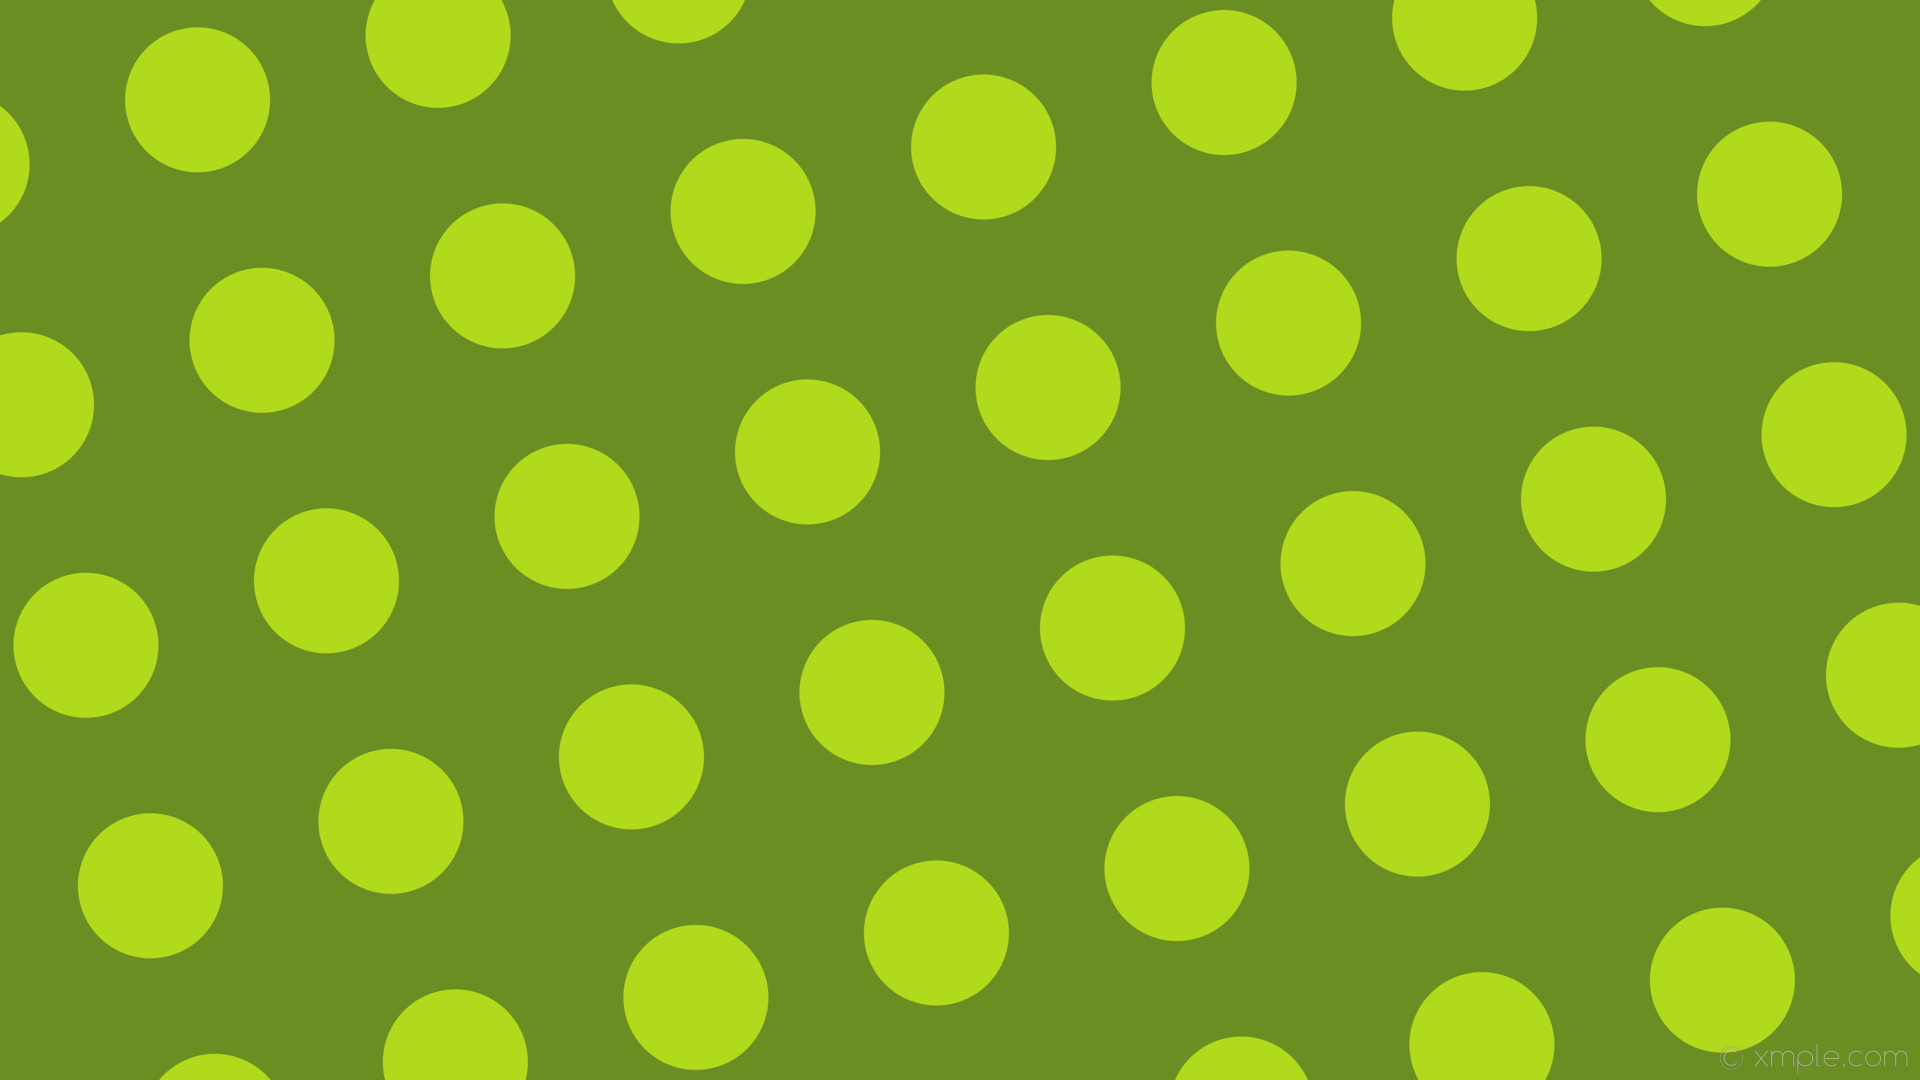 1920x1080 wallpaper green yellow polka dots spots olive drab #6b8e23 #b2da1c 285Â°  145px 249px